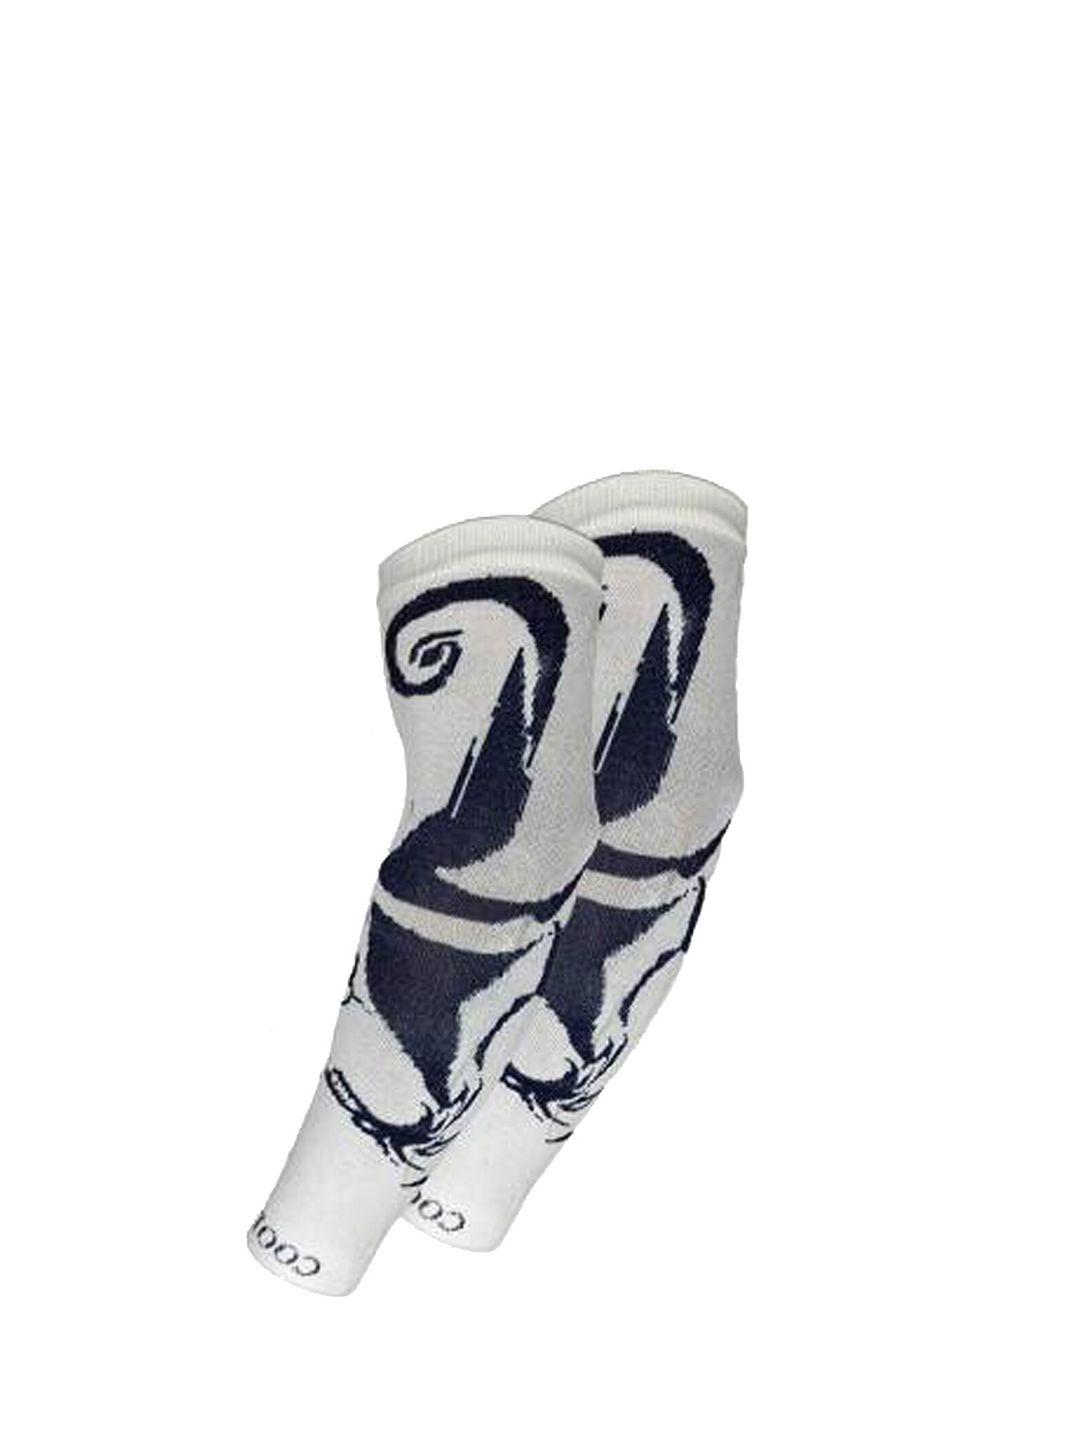 aadikart printed lightweight soft cotton sports arm sleeves